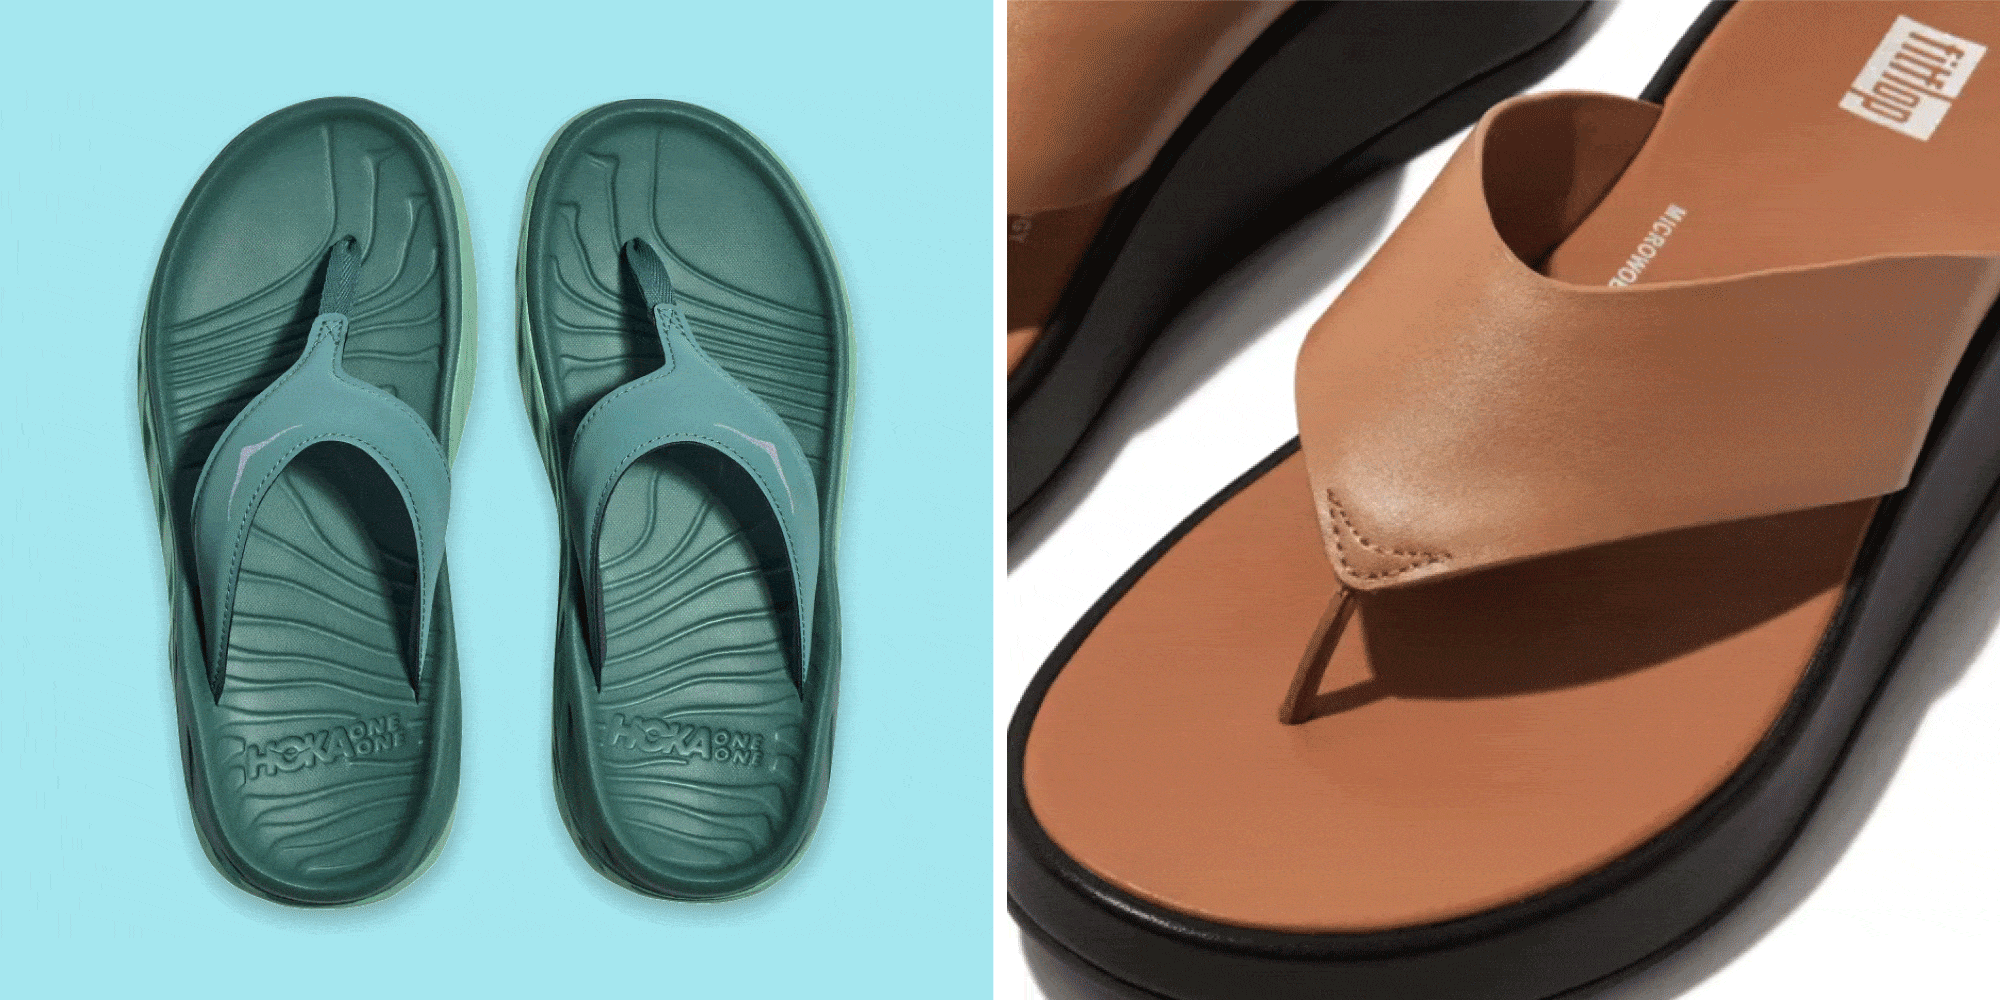 Leg Length Discrepancy Sandals: How I Got Them — 360 Yoga